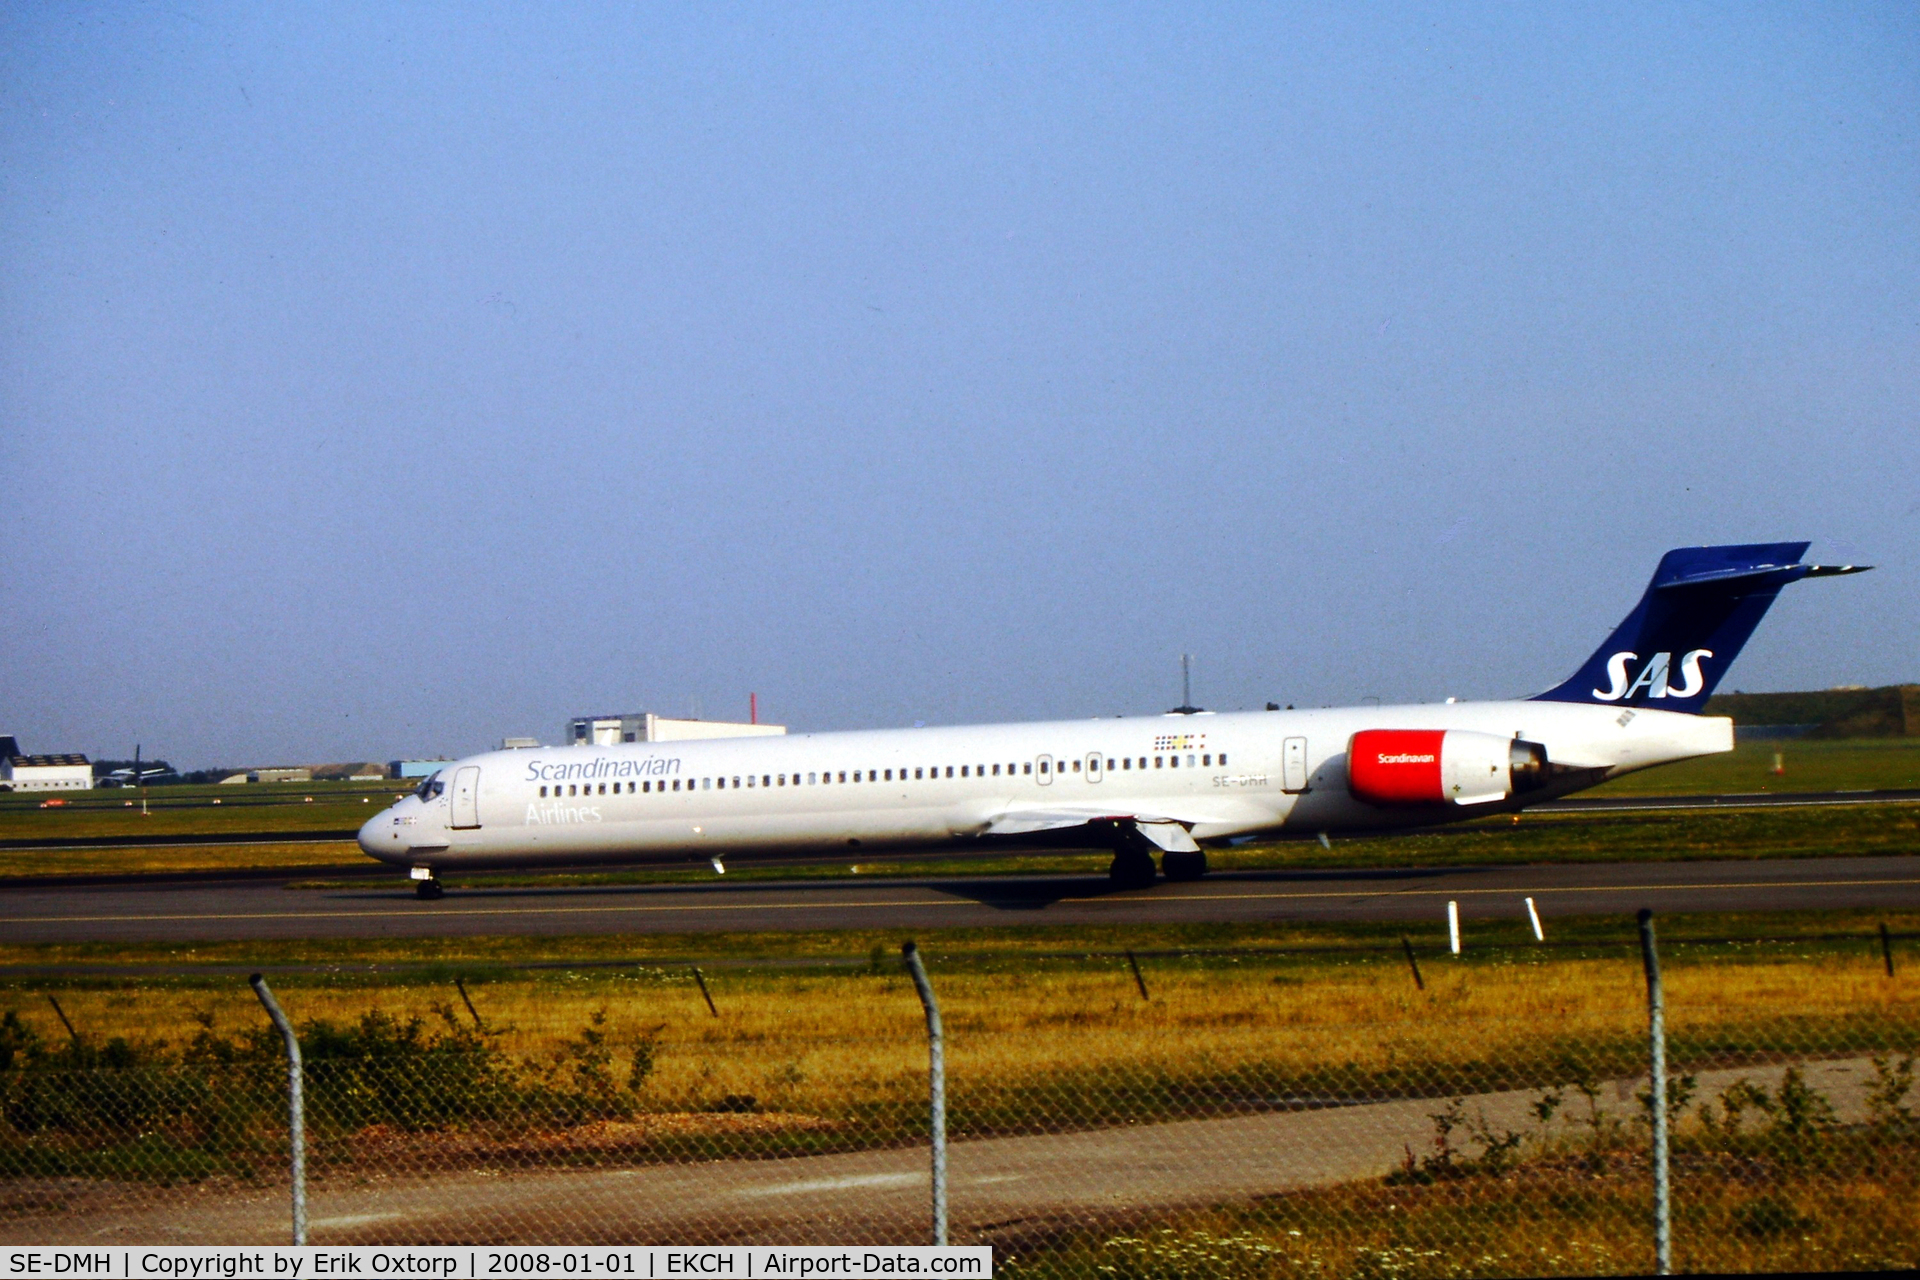 SE-DMH, 1997 McDonnell Douglas MD-90-30 C/N 53543, SE-DMH in CPH AUG02